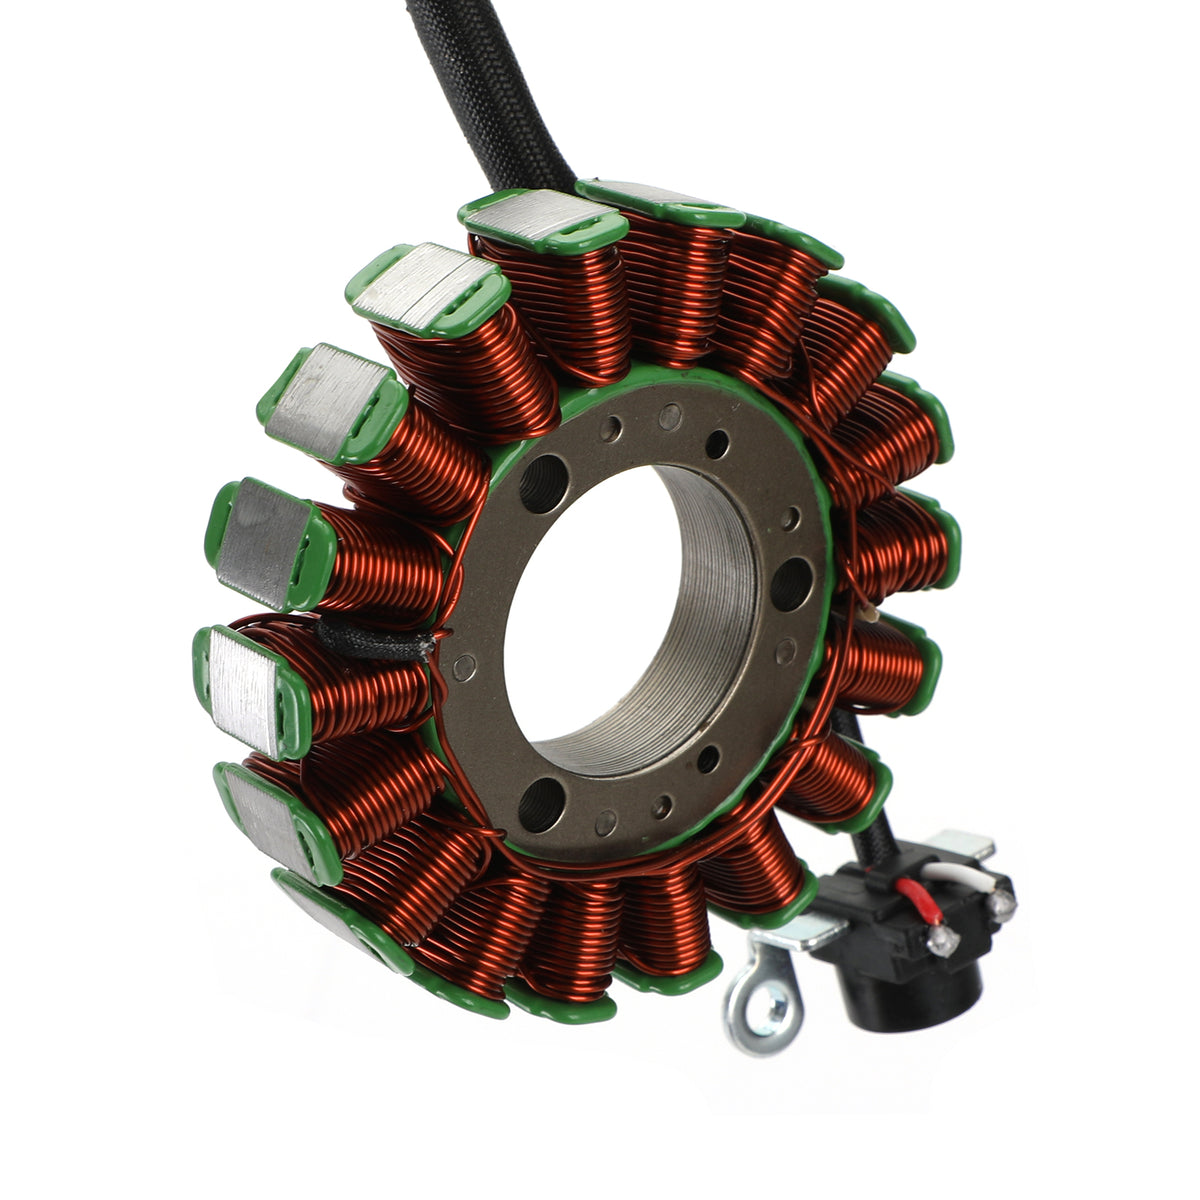 Kit guarnizioni bobina regolatore magneto statore per Yamaha XG 250, XT 250 Serow 04-07 generico